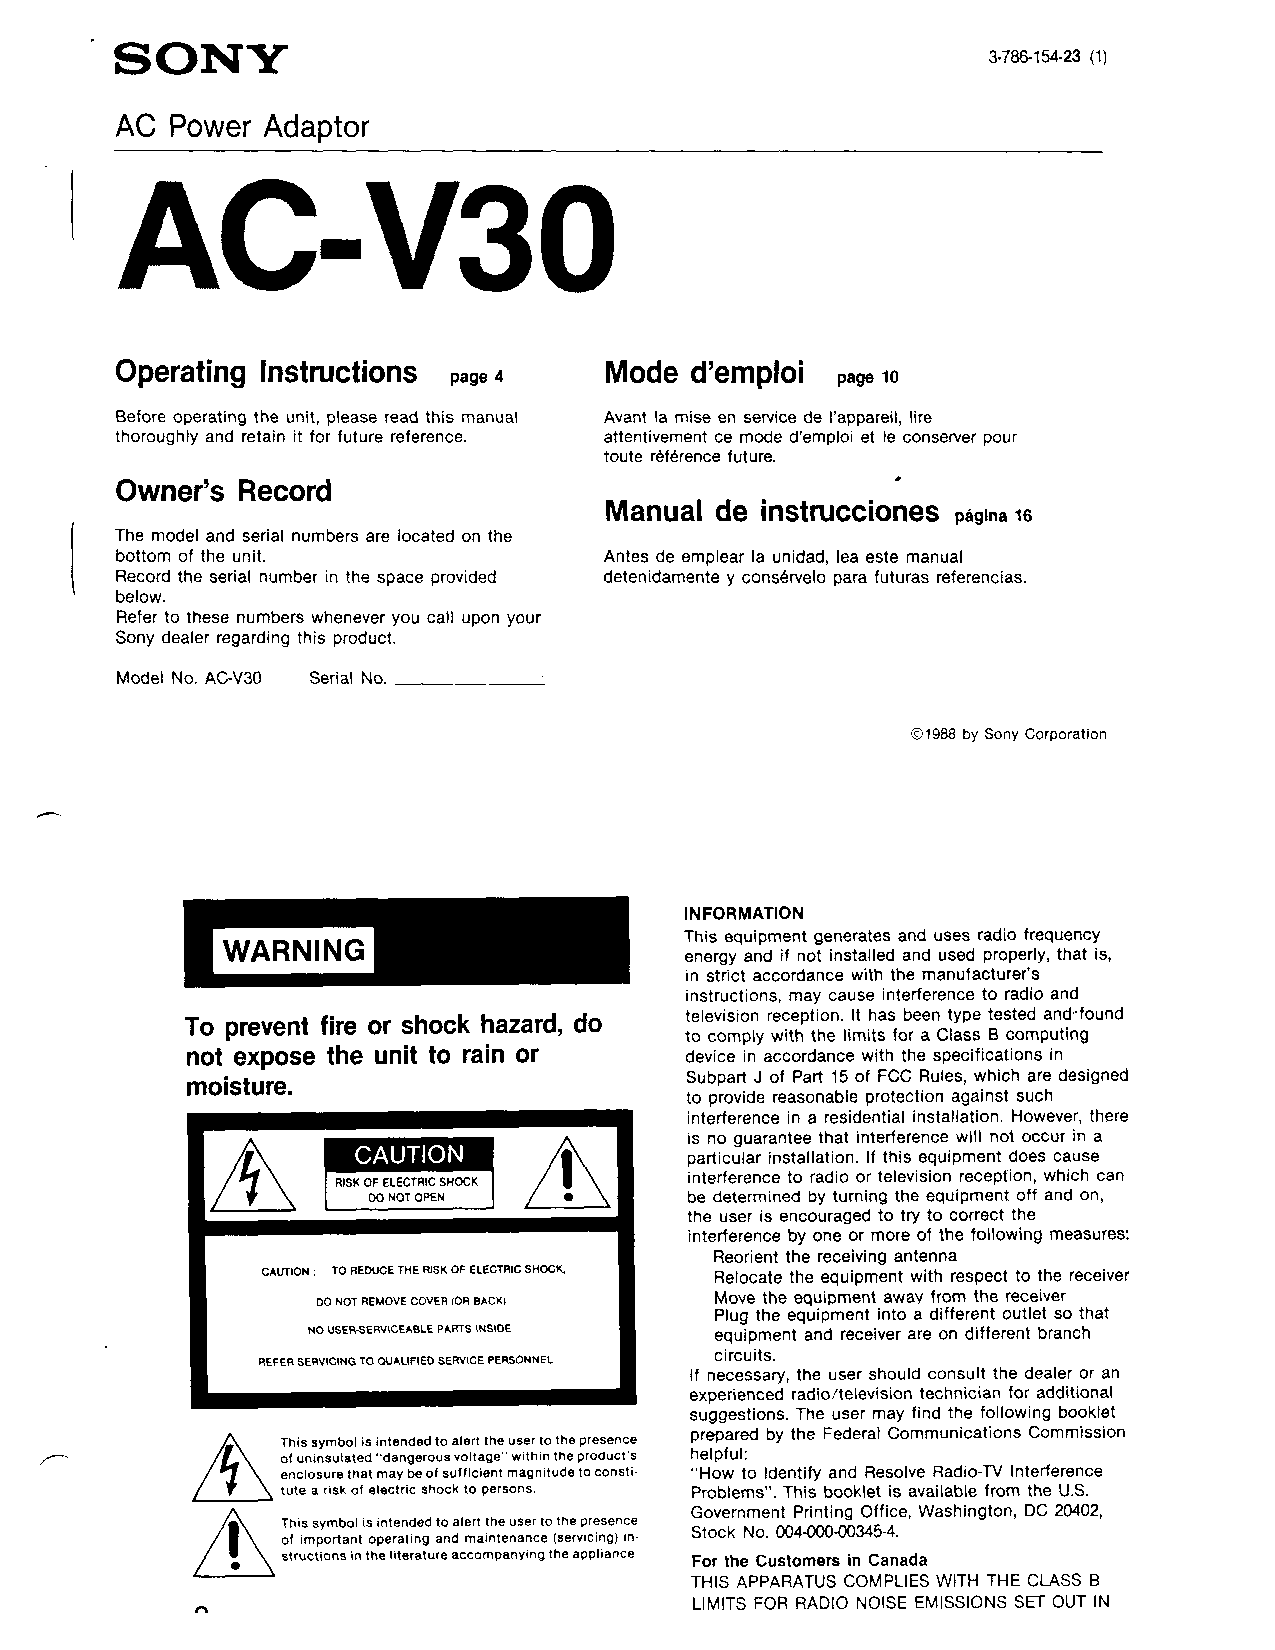 Sony AC-V30 User Manual